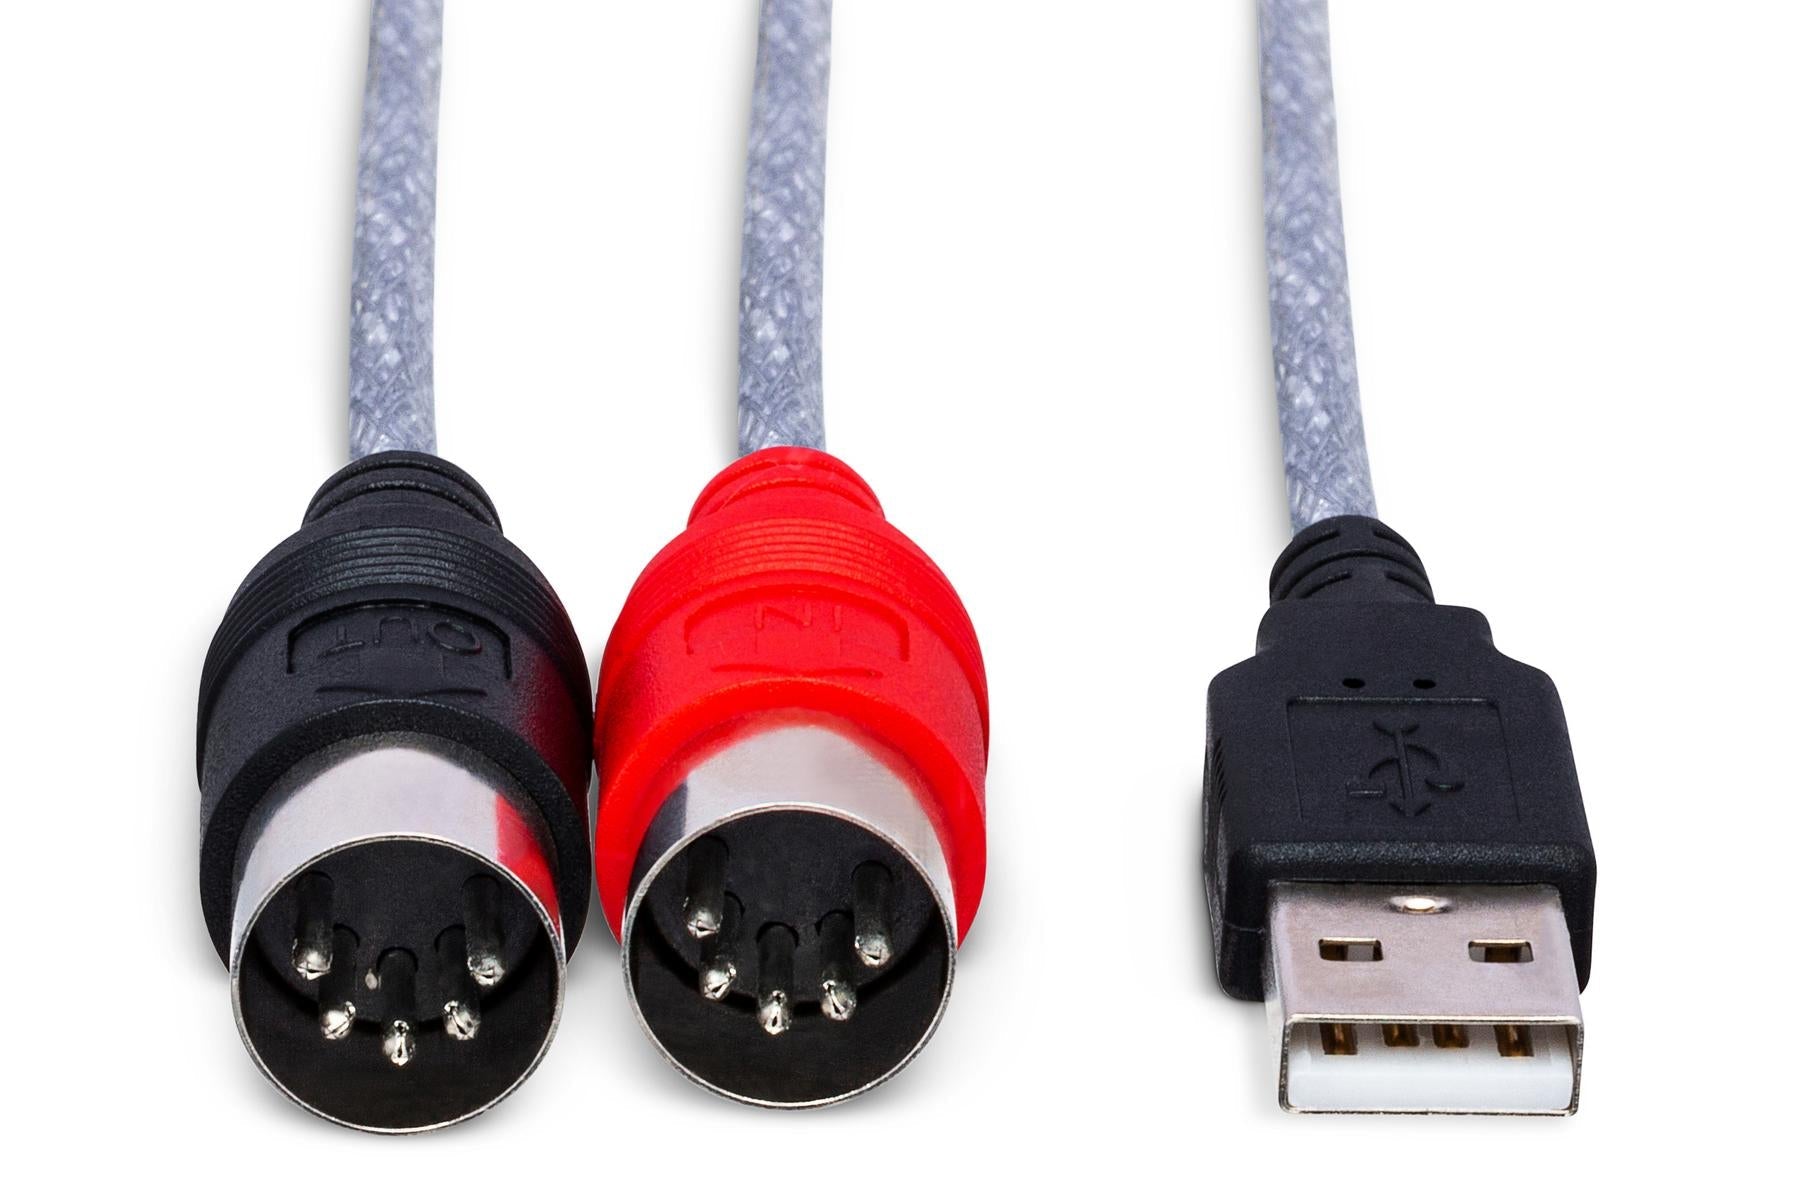 HOSA USM422 MIDI 10-USB A Cable